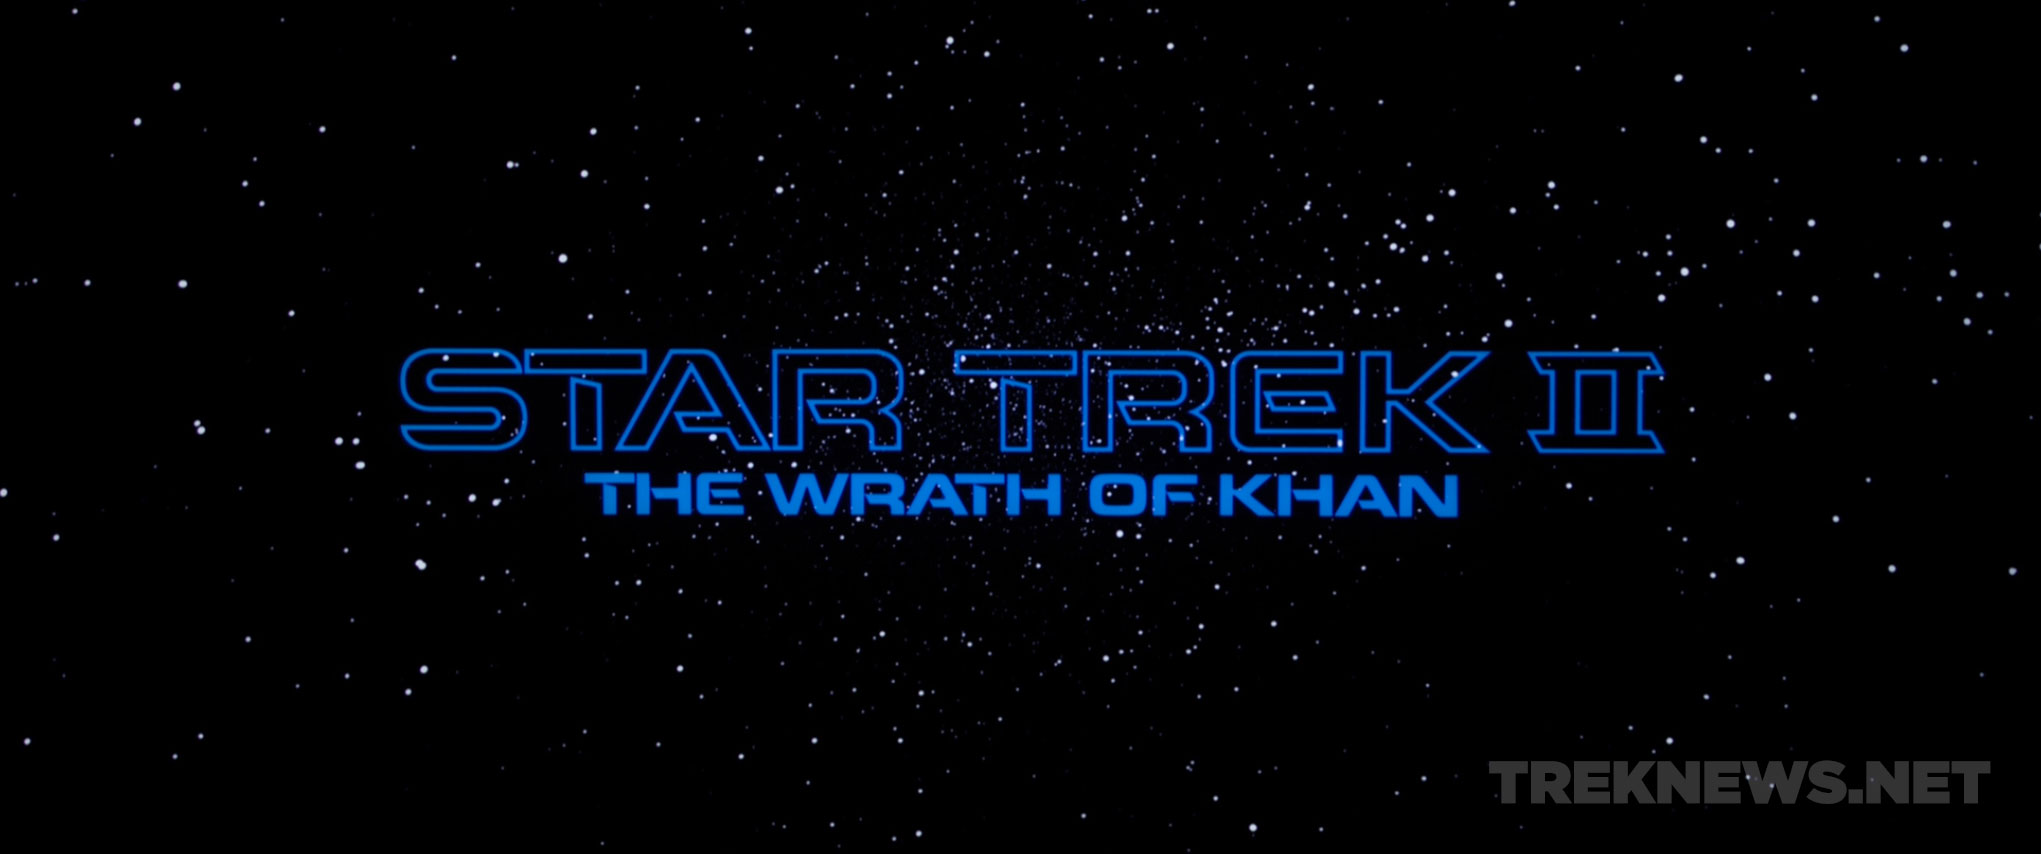 STAR TREK II: THE WRATH OF KHAN - The Director's Cut